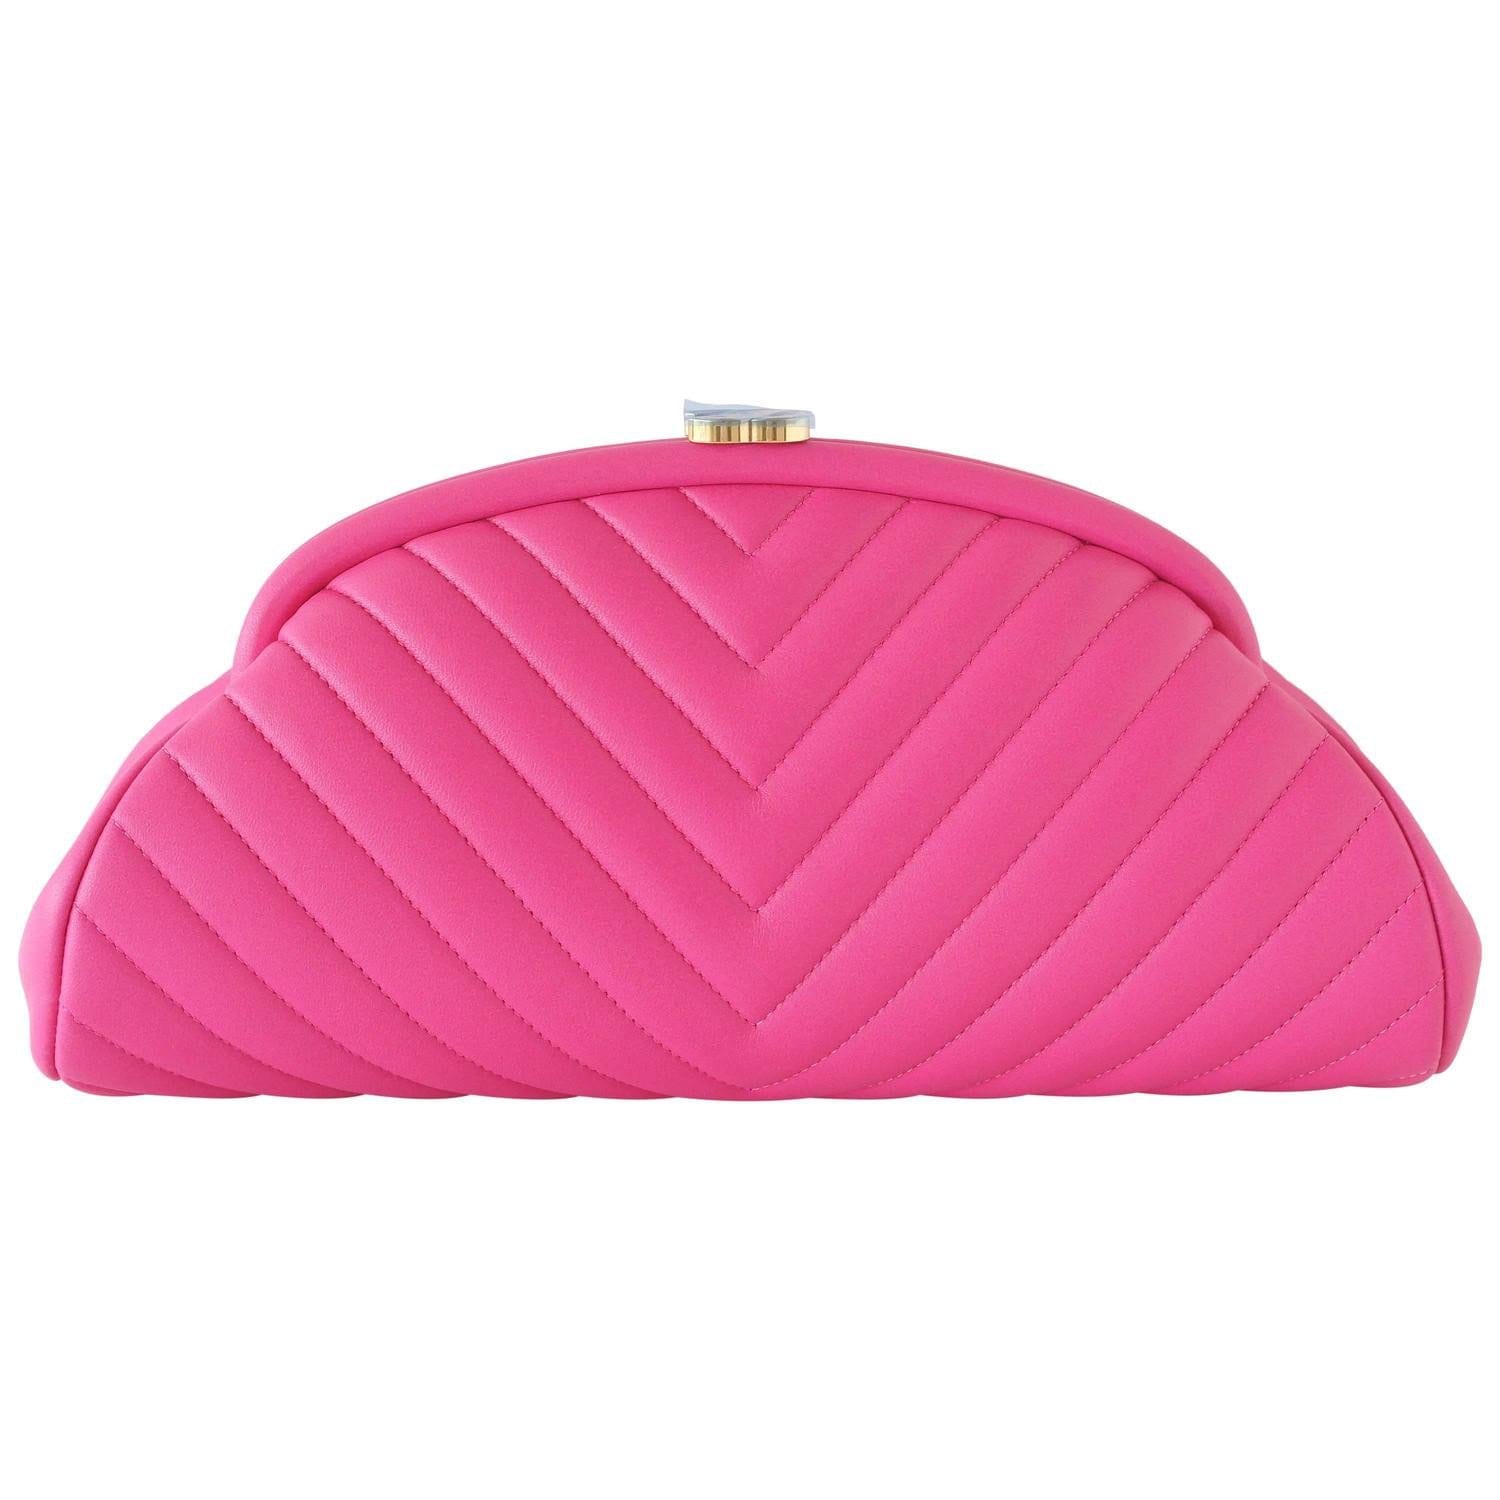 Chanel Bag Rare Pink Chevron Lambskin Clutch new – Mightychic